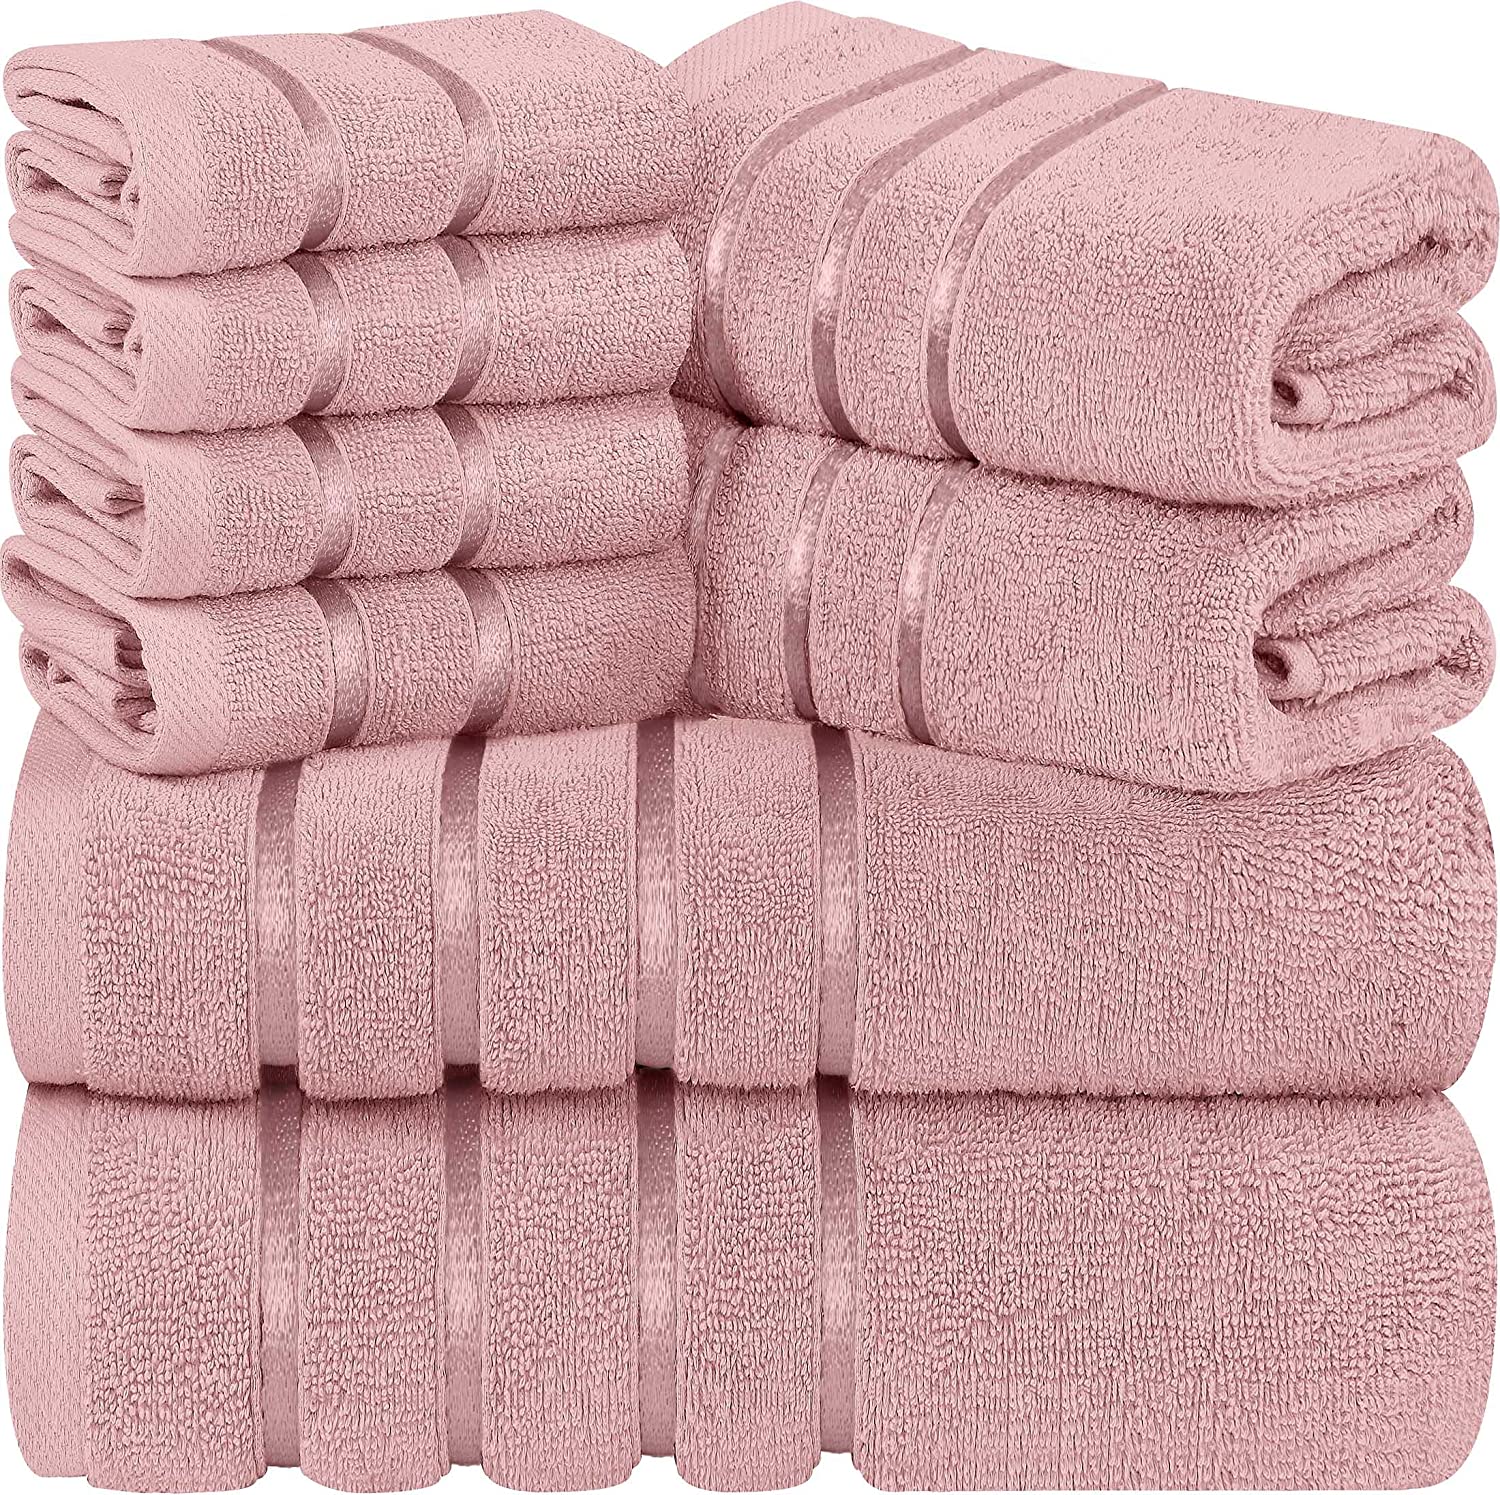 Utopia Towels 8-Piece Luxury Towel Set, 2 Bath Towels, 2 Hand